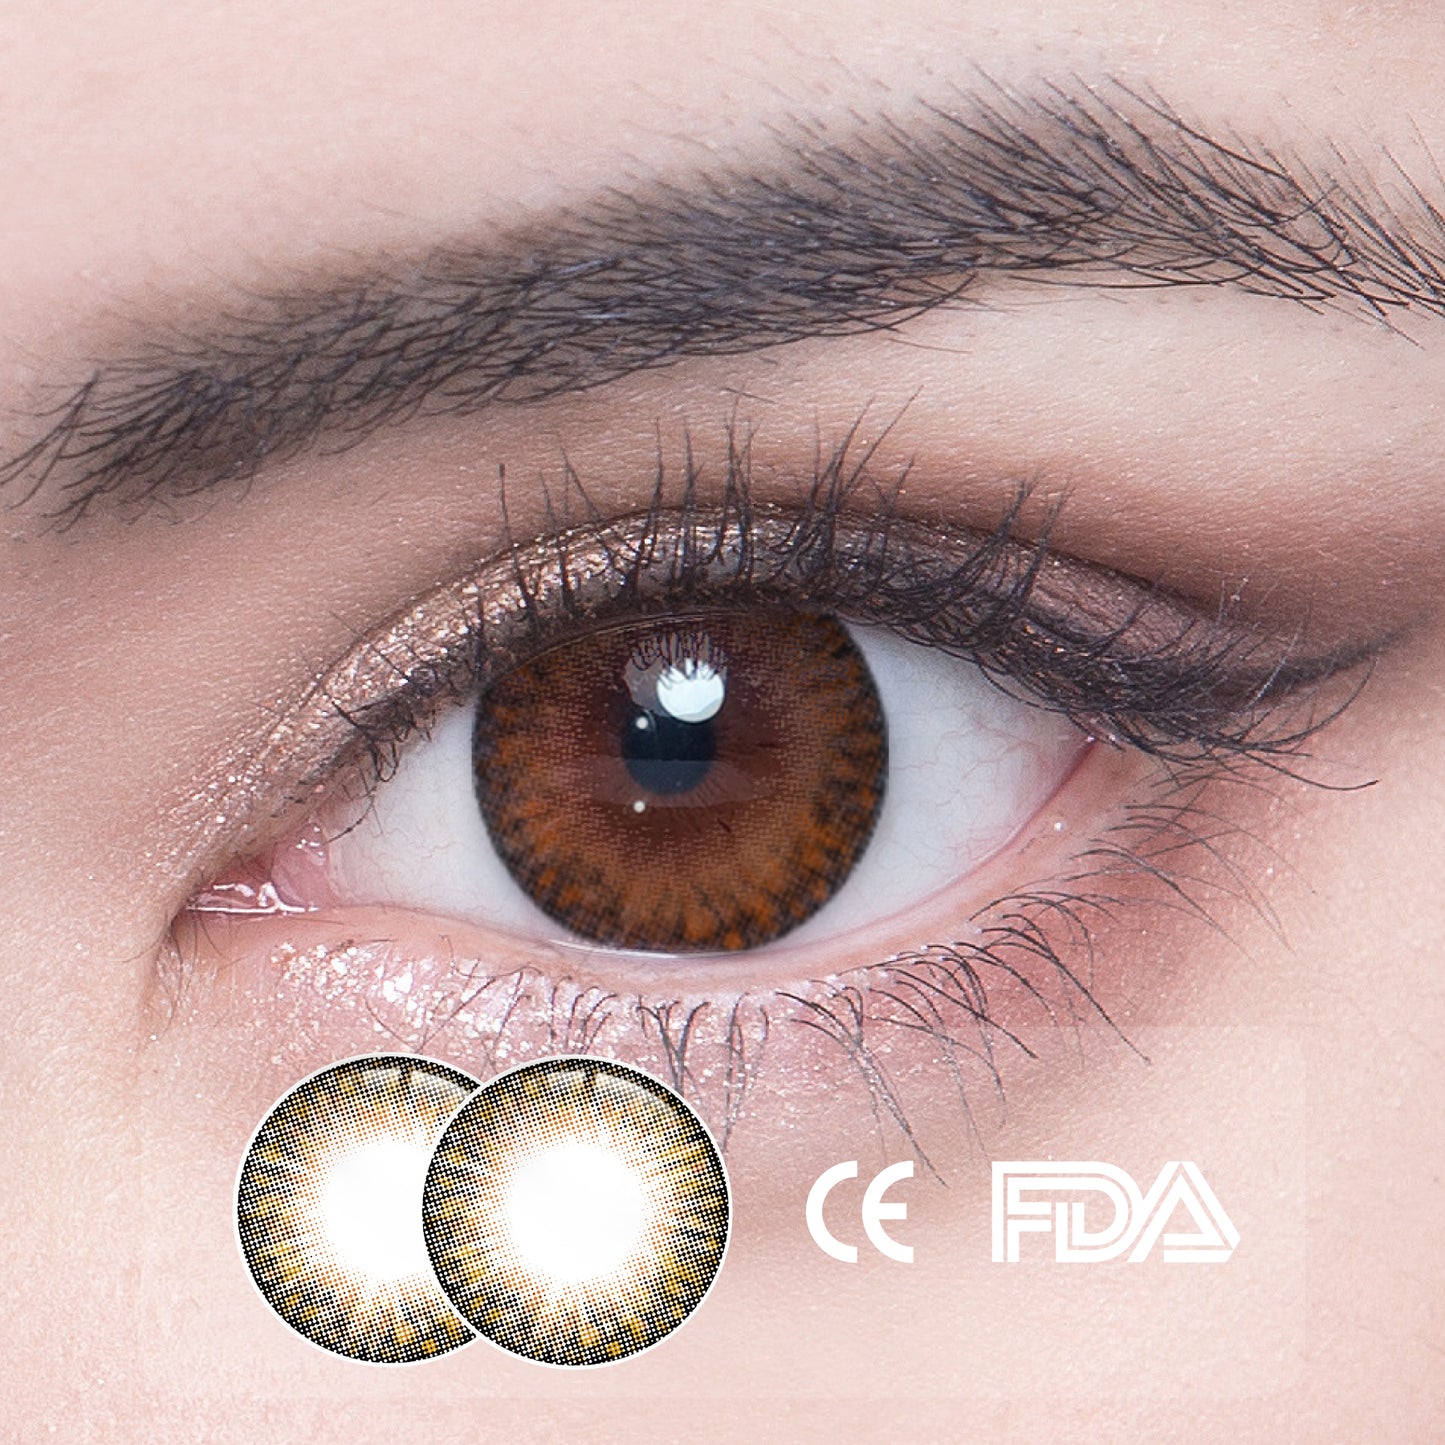  1Pcs FDA Certificate Eyes Colorful Contact Lenses - Eden deep brown